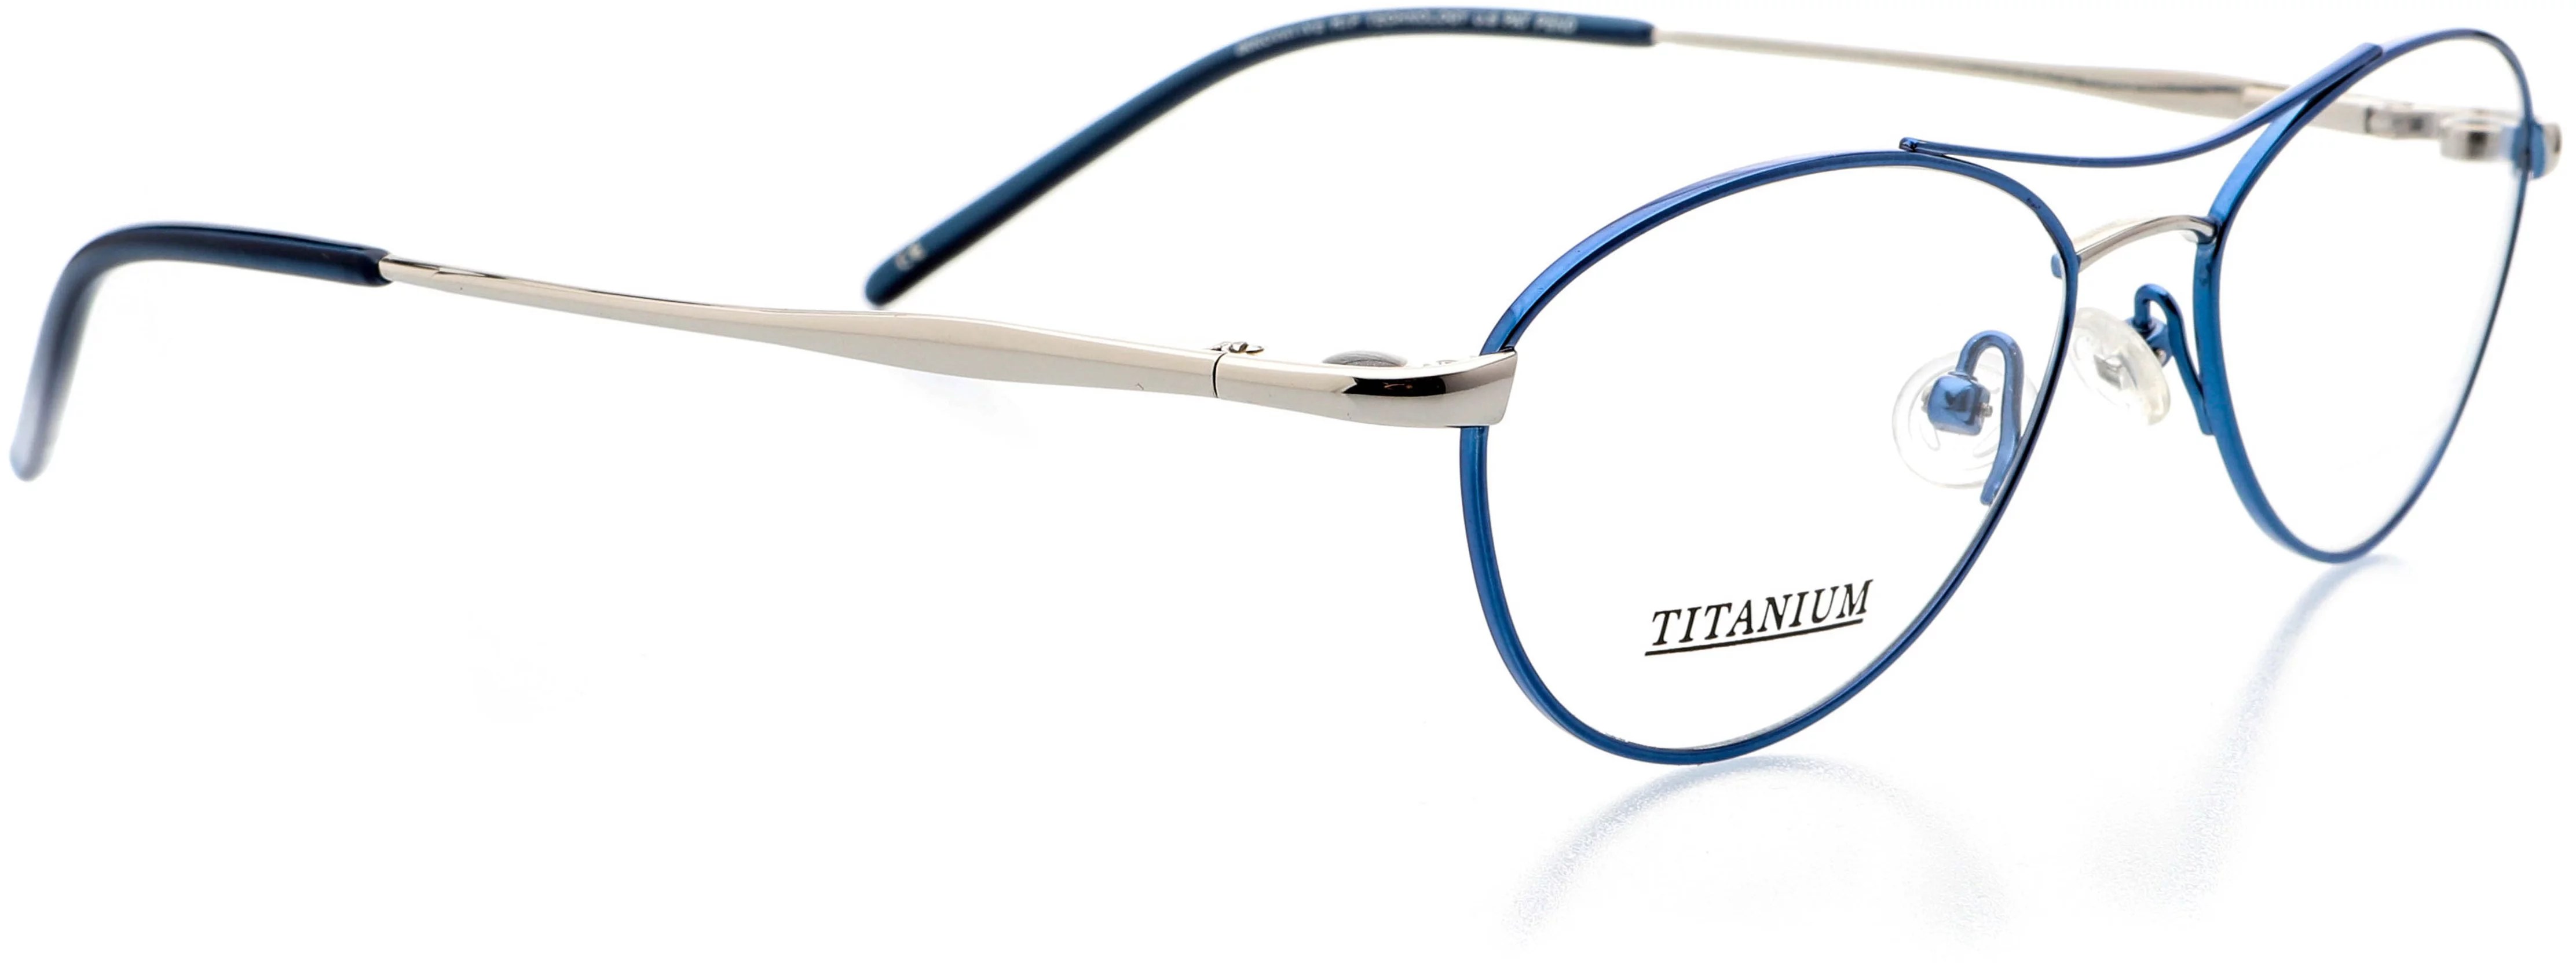 Optical Eyewear Aviator Shape. Titanium Full Rim Frame